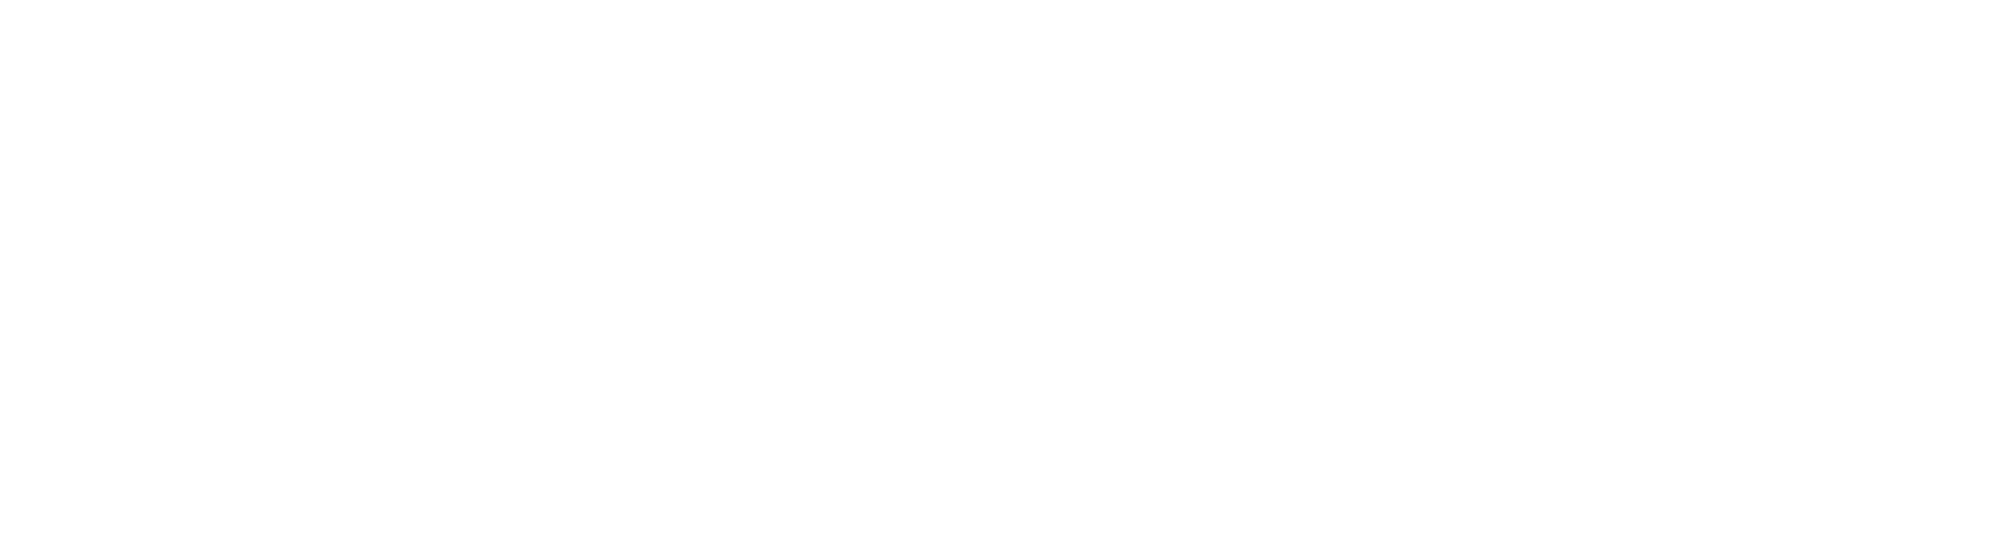 RimLocal™ Directory Logo with Tagline in Full Color